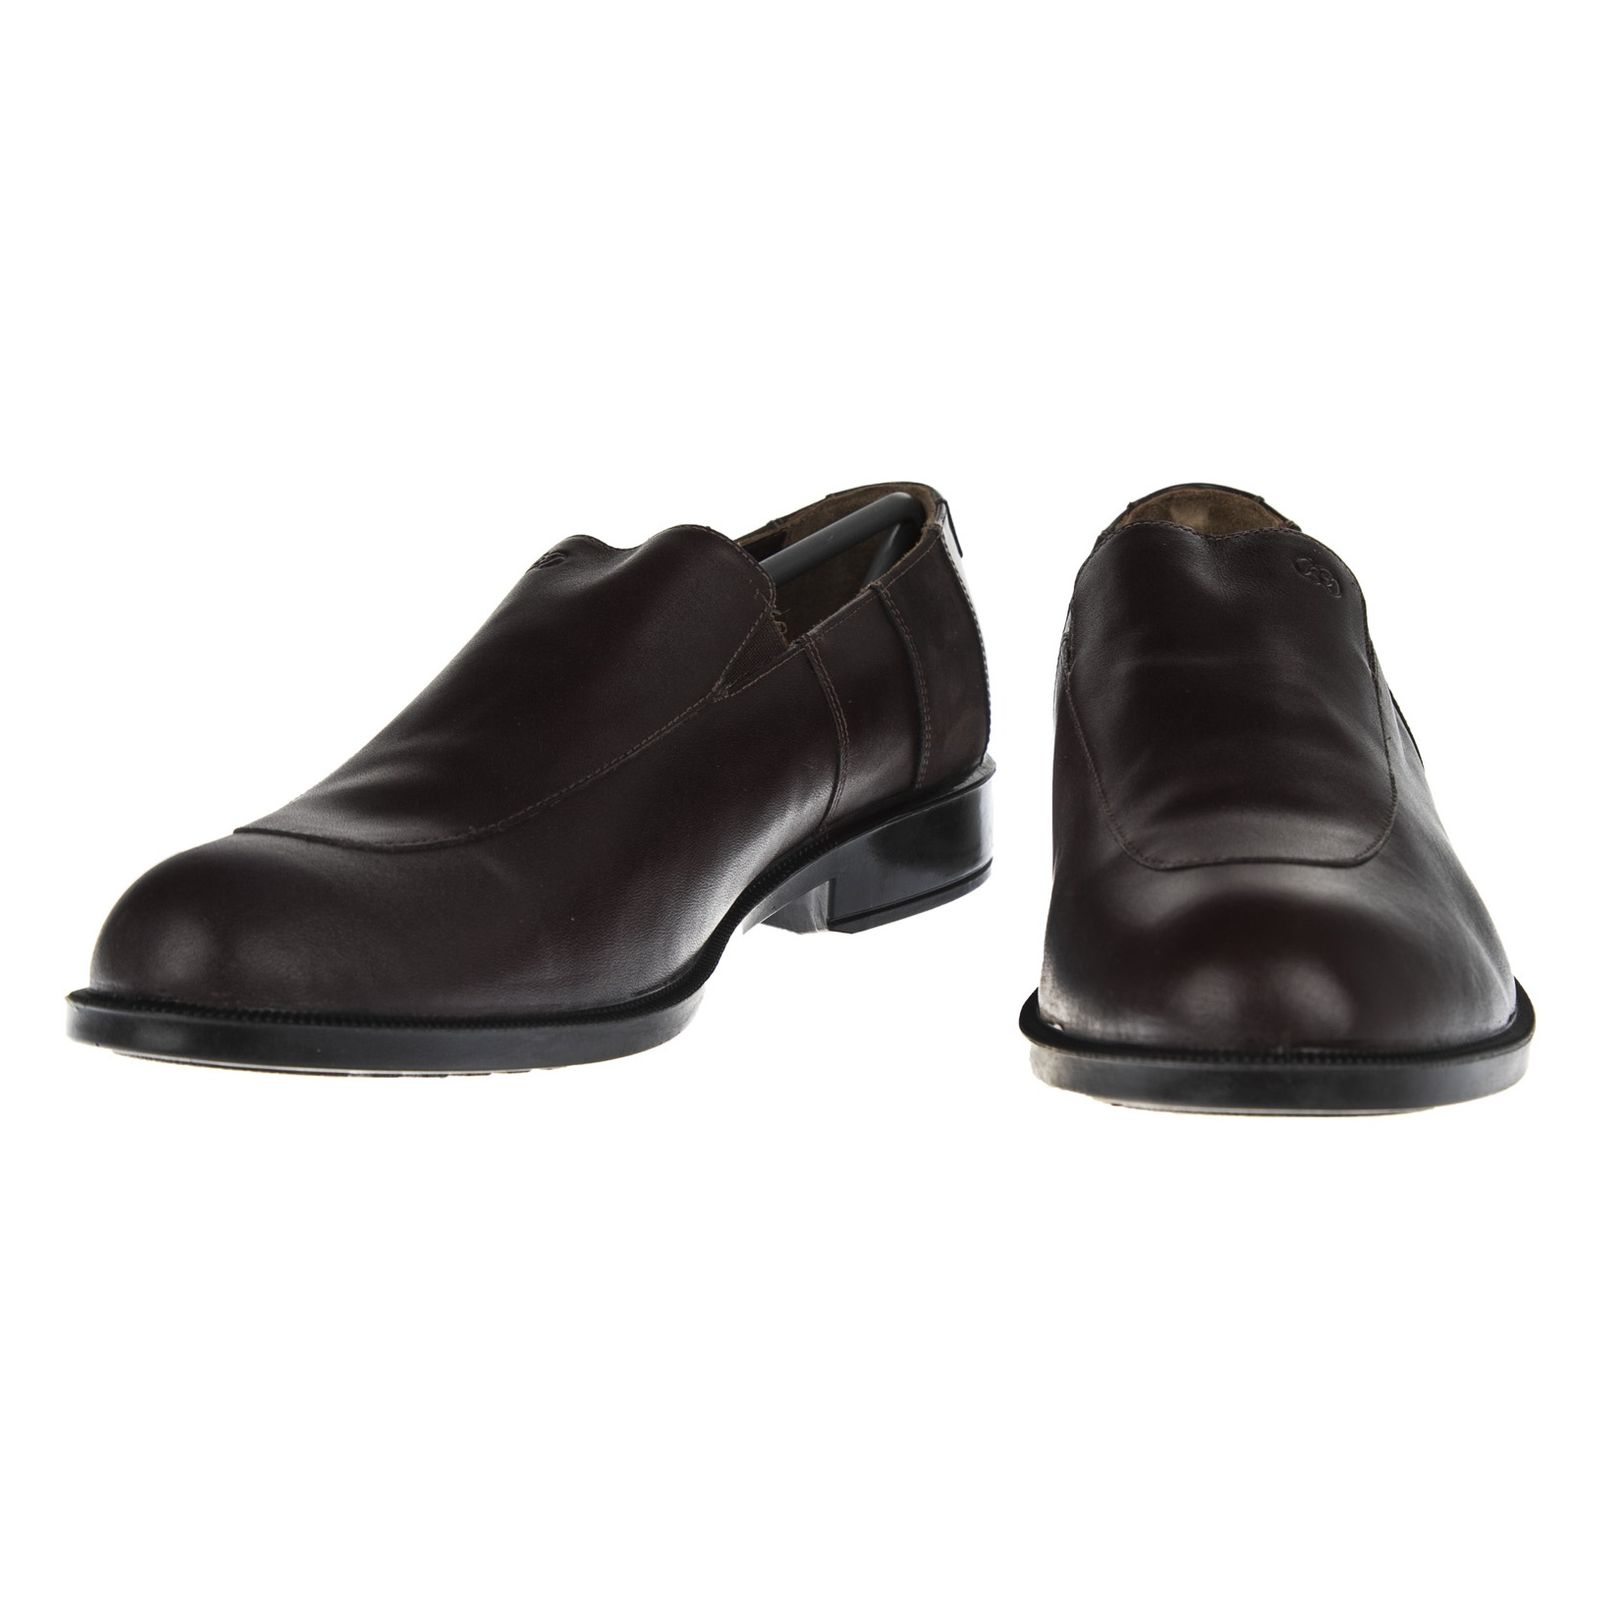 کفش مردانه دنیلی مدل 209110136379 -  - 5